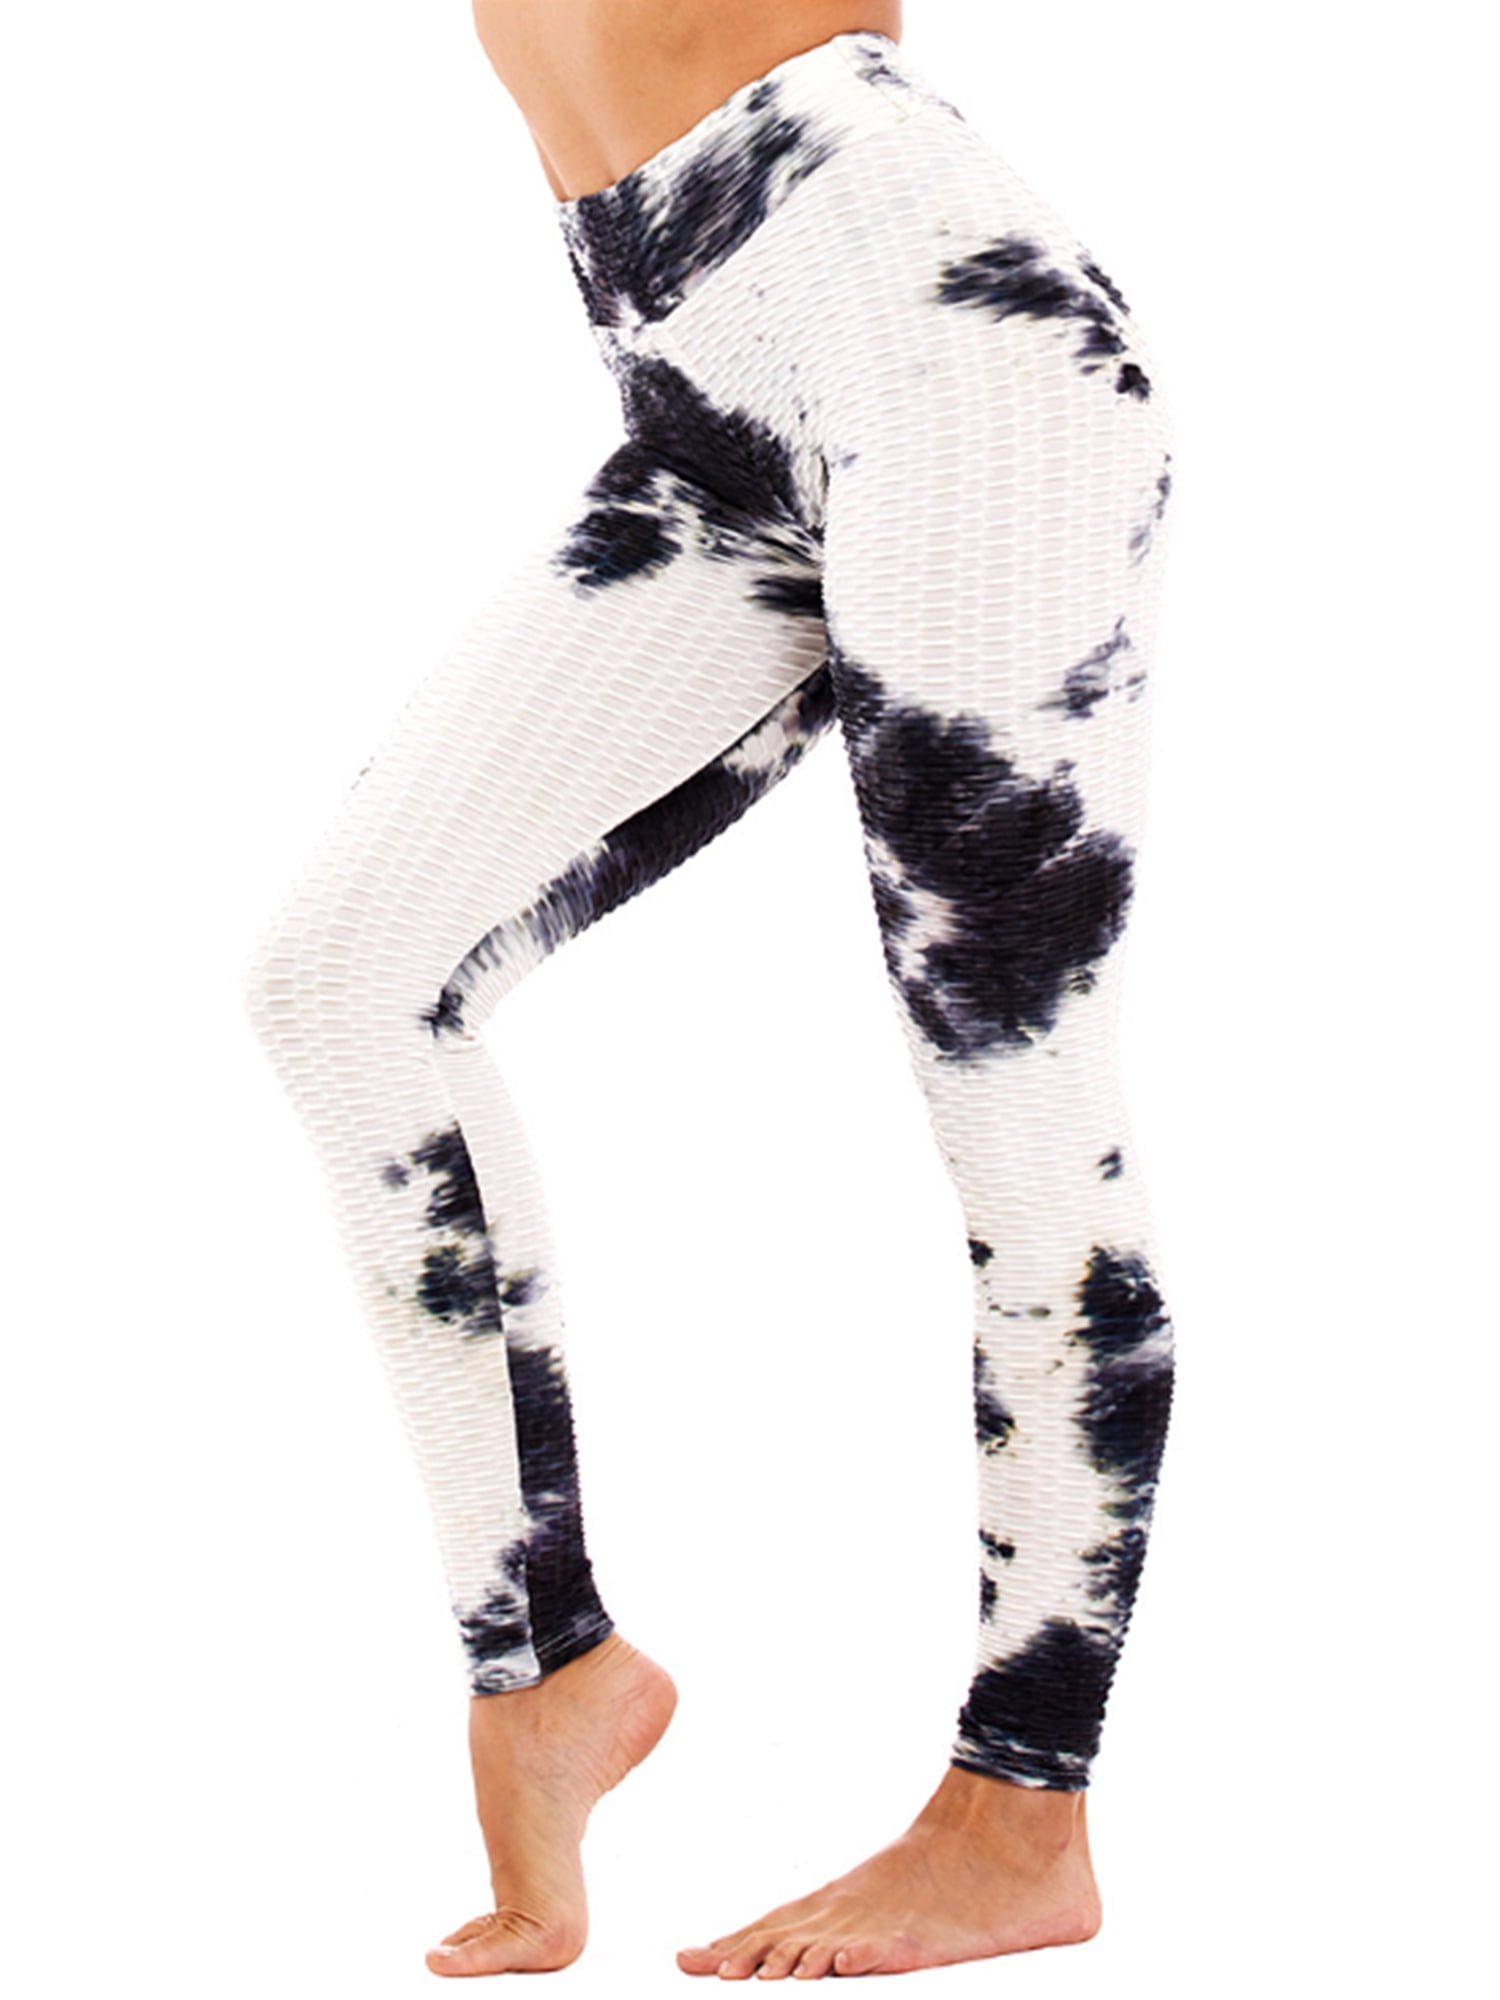 Womens Anti Cellulite Yoga Pants Tie Dye Leggings Scrunch Stretch Fitness Sports